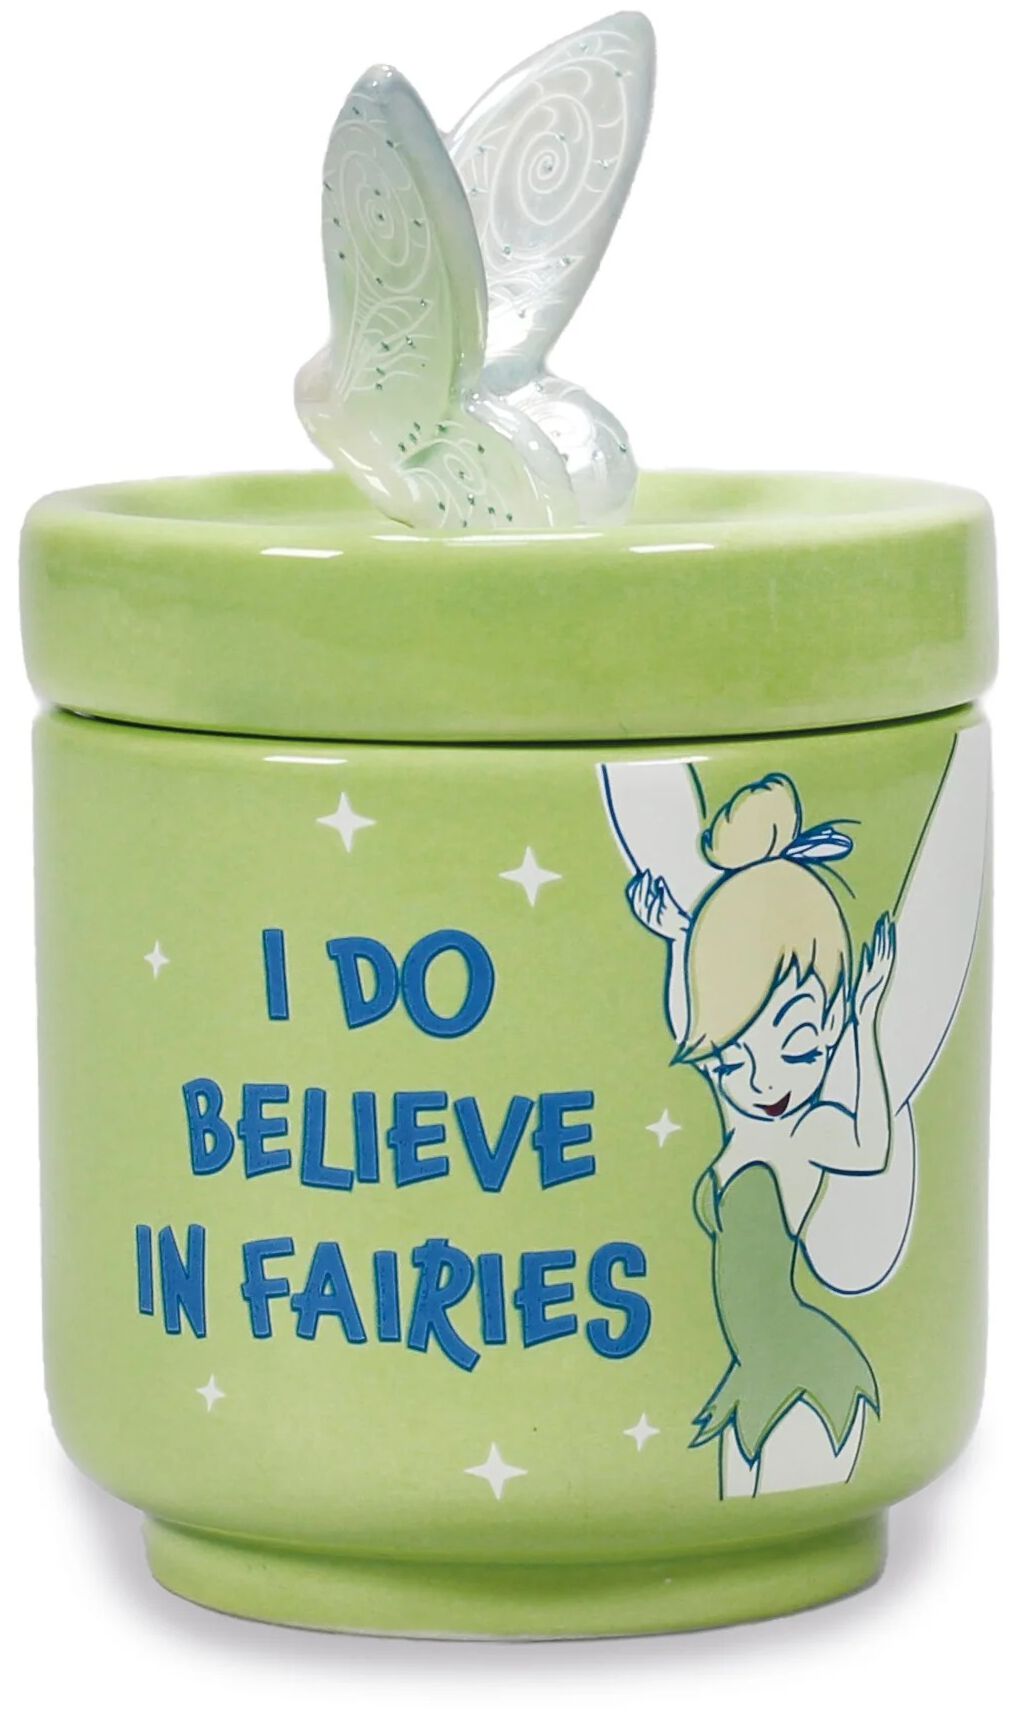 Peter Pan - Disney Aufbewahrungsbox - I Do Believe in Fairies - multicolor  - Lizenzierter Fanartikel